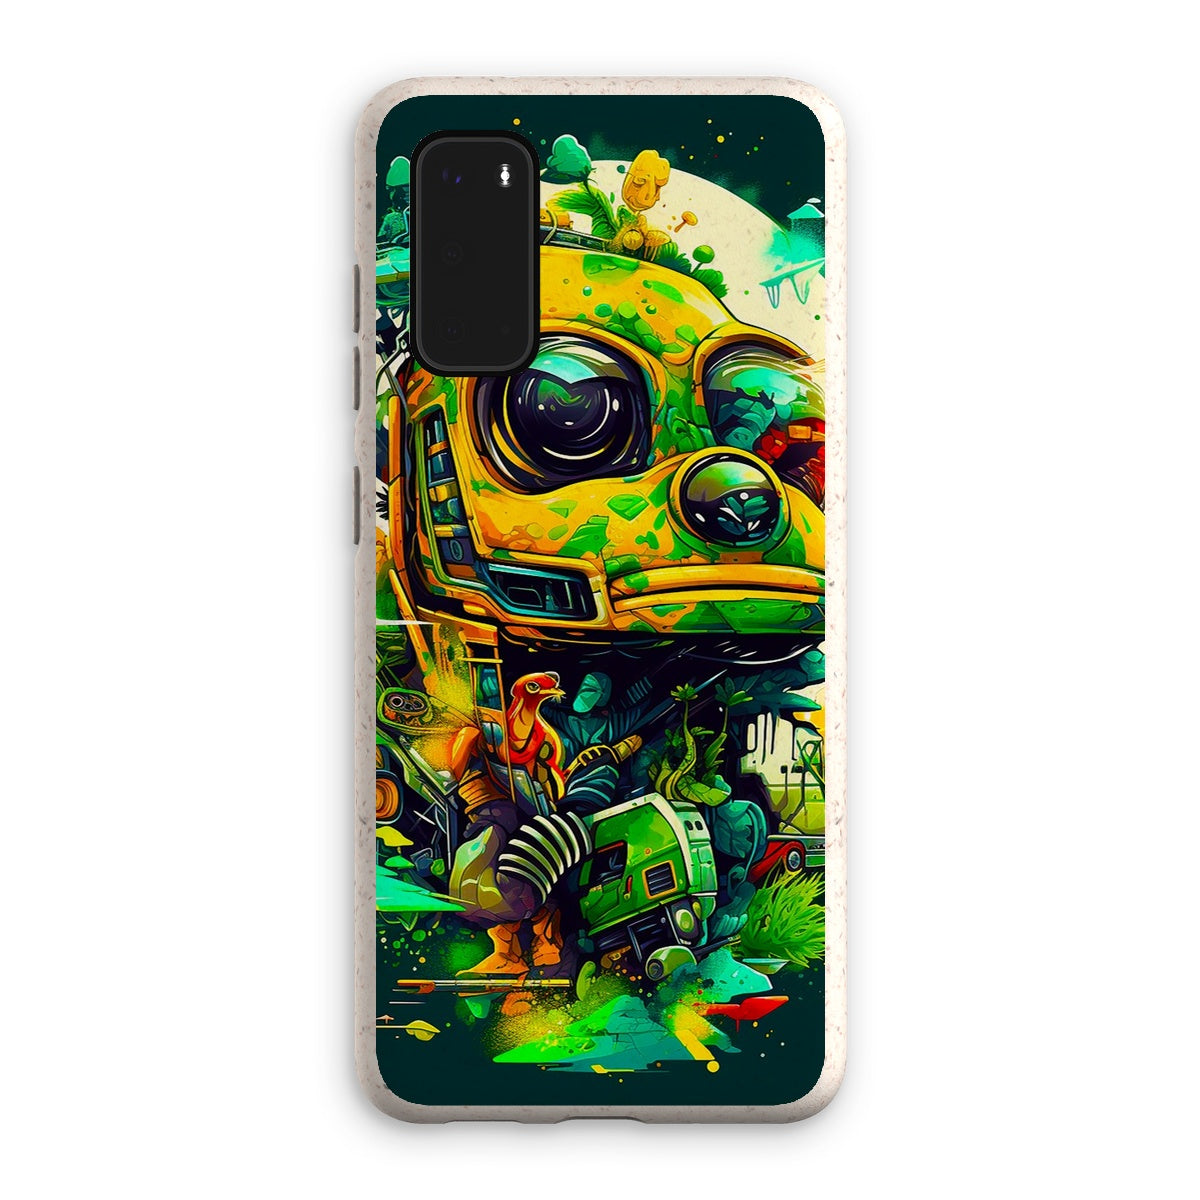 Mechanical Muse: Vibrant Graffiti Odyssey in Surreal Auto Wonderland Eco Phone Case